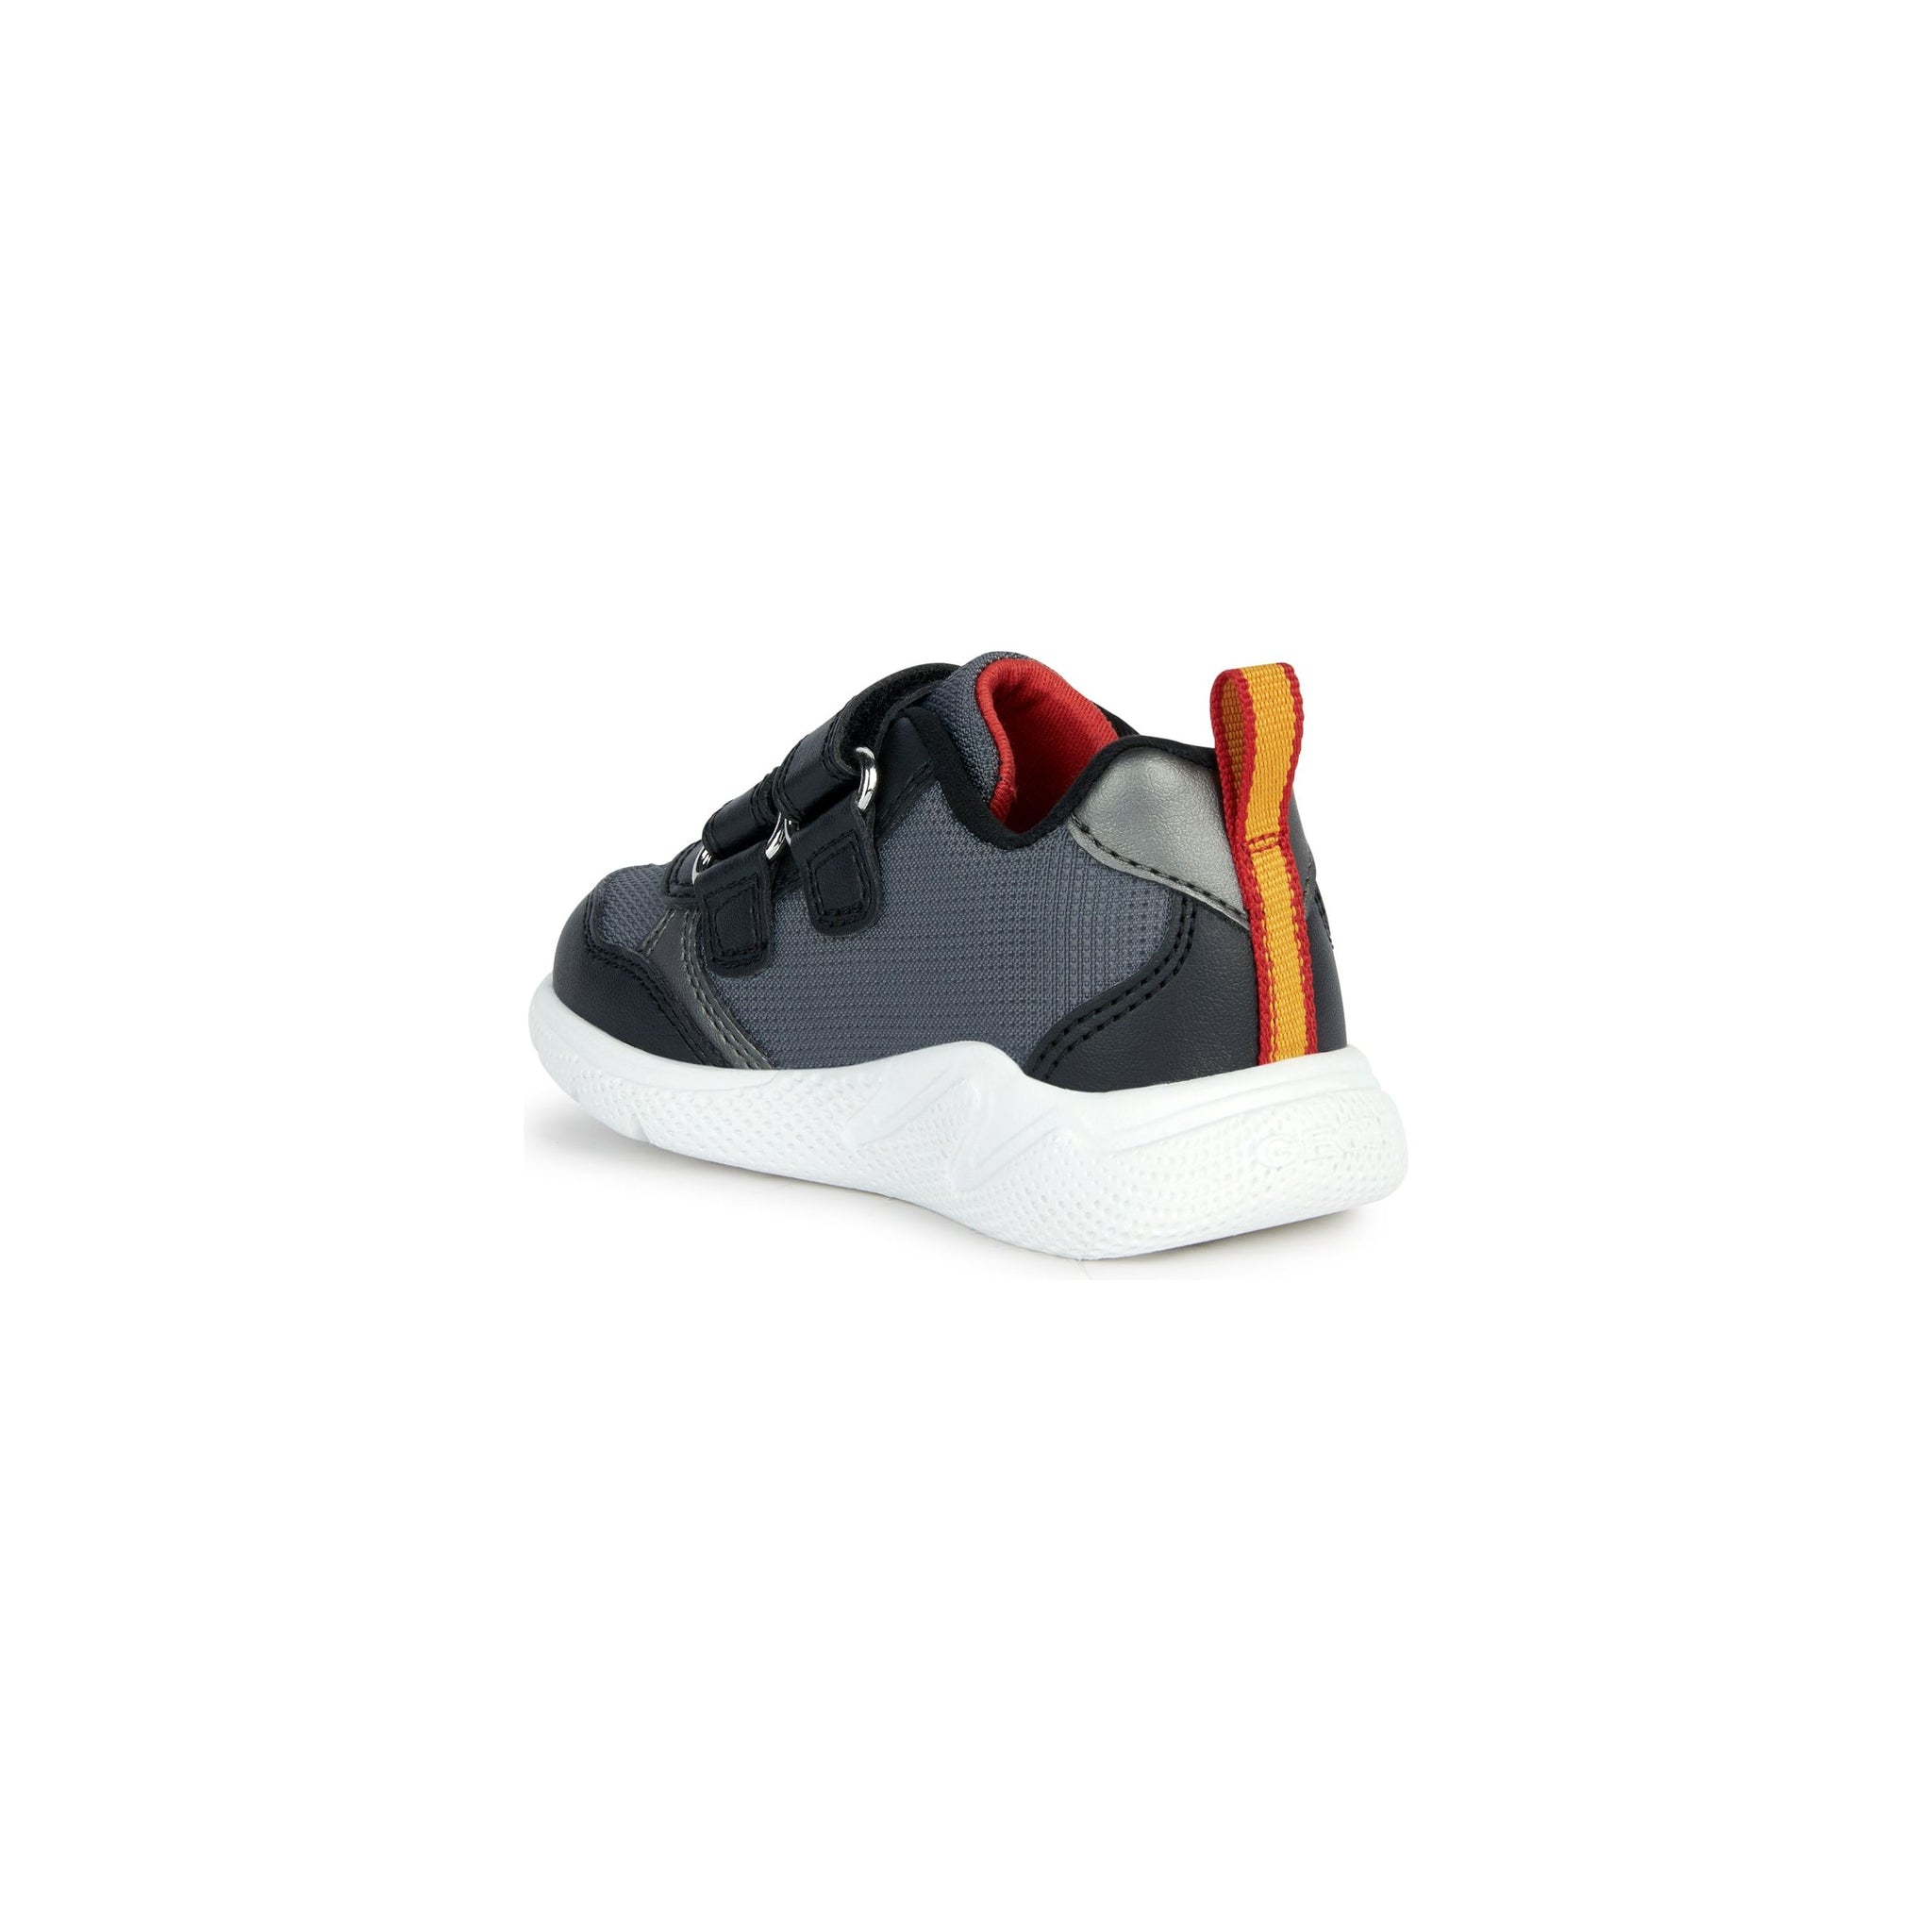 Geox Sprintye (B354UC)- Boys Velcro trainer in Black/Red  | Geox Shoes | Childrens Shoe Fitting | Wisemans | Bantry | West Cork | Ireland